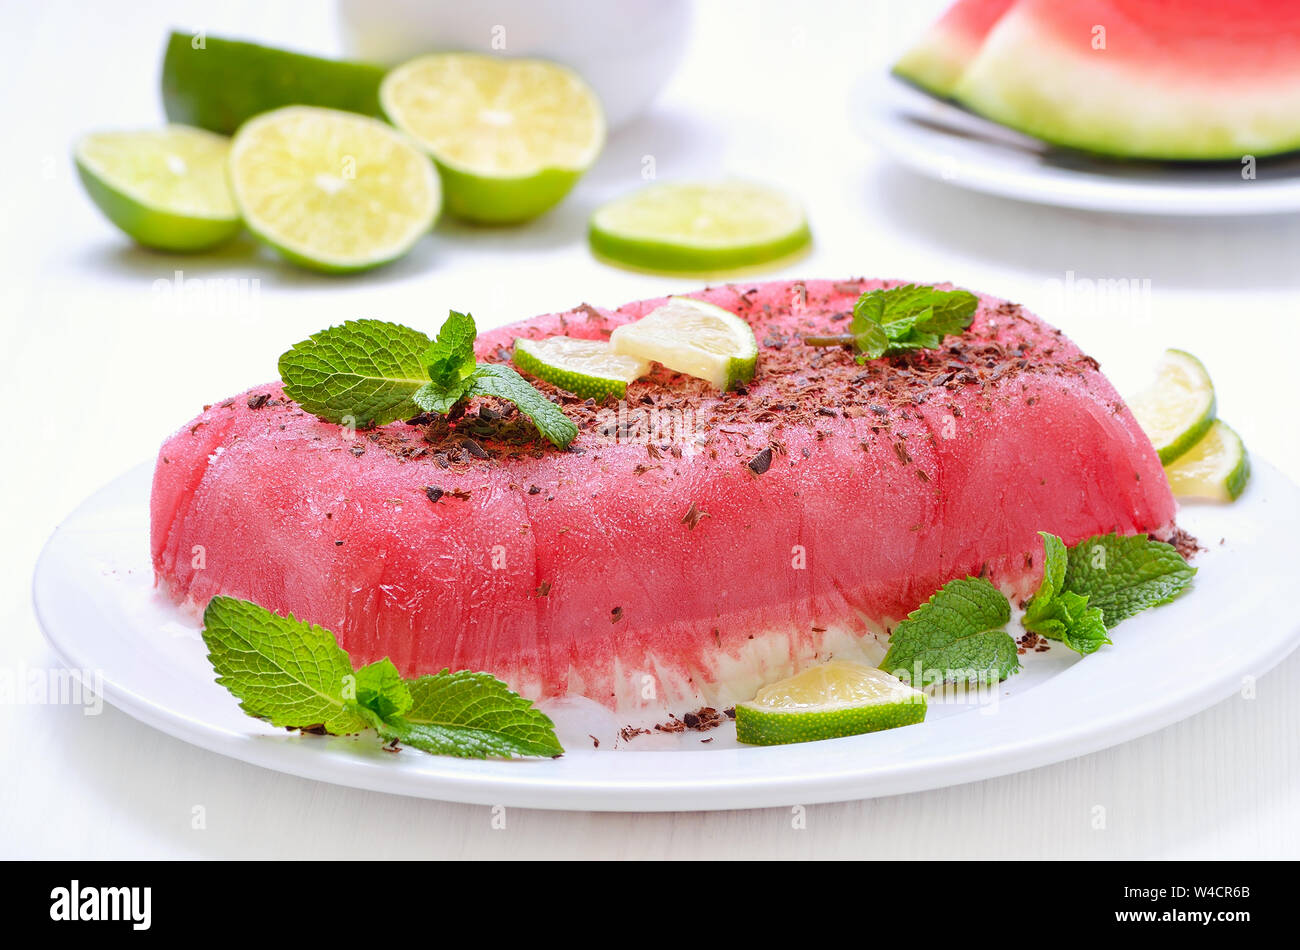 Ice-cream cake from watermelon, close-up Stock Photo